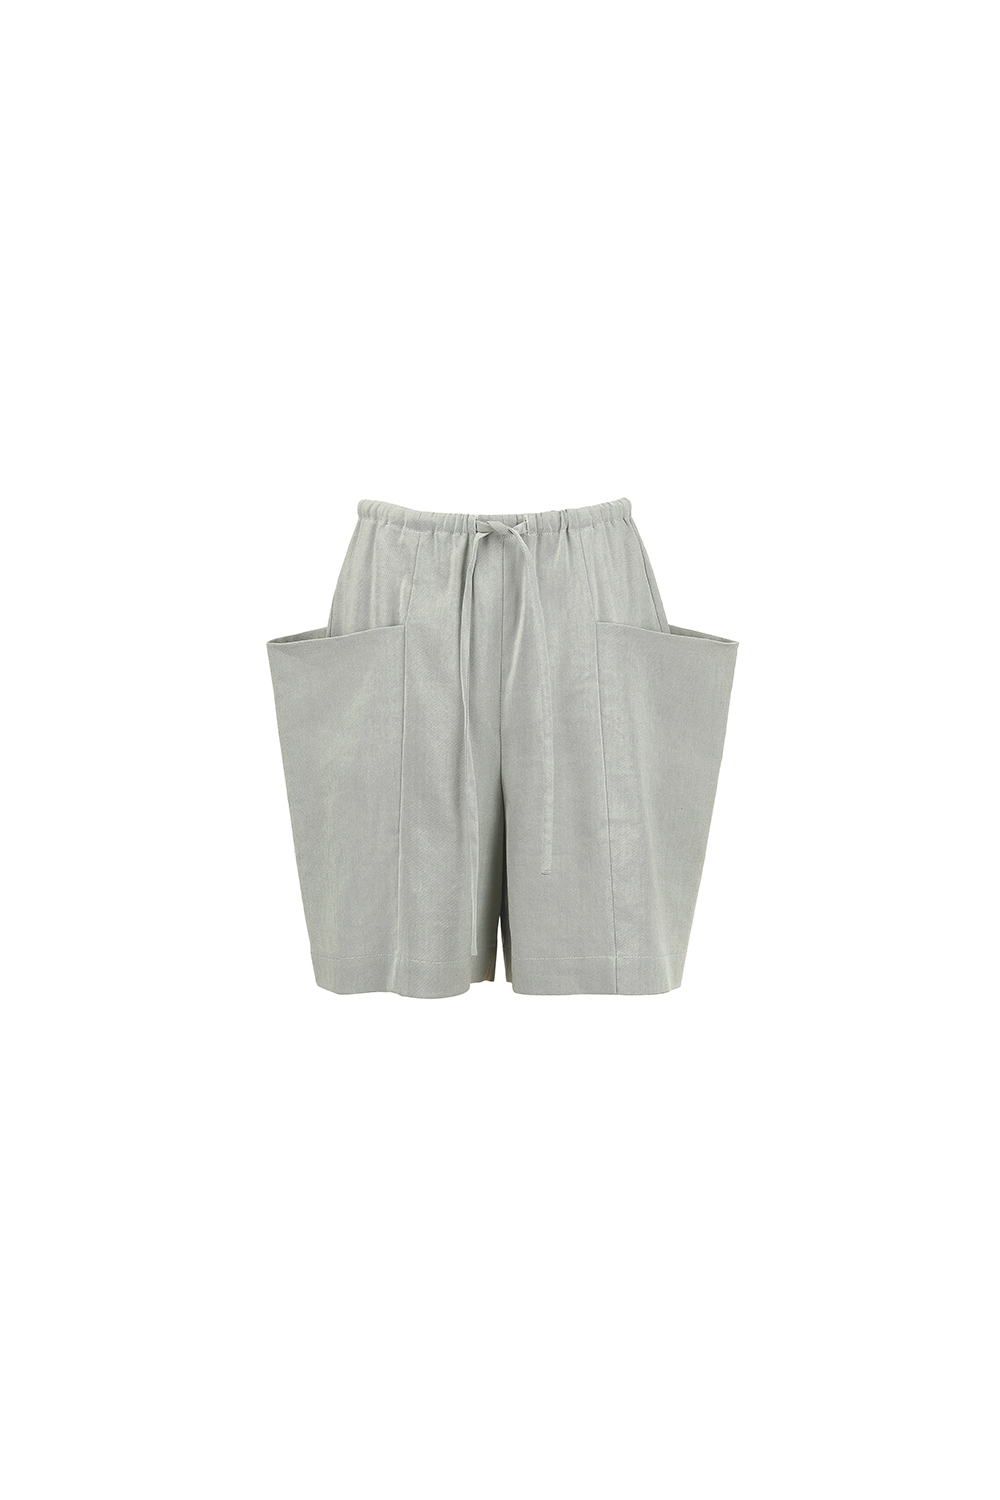 shorts grey color image-S3L9